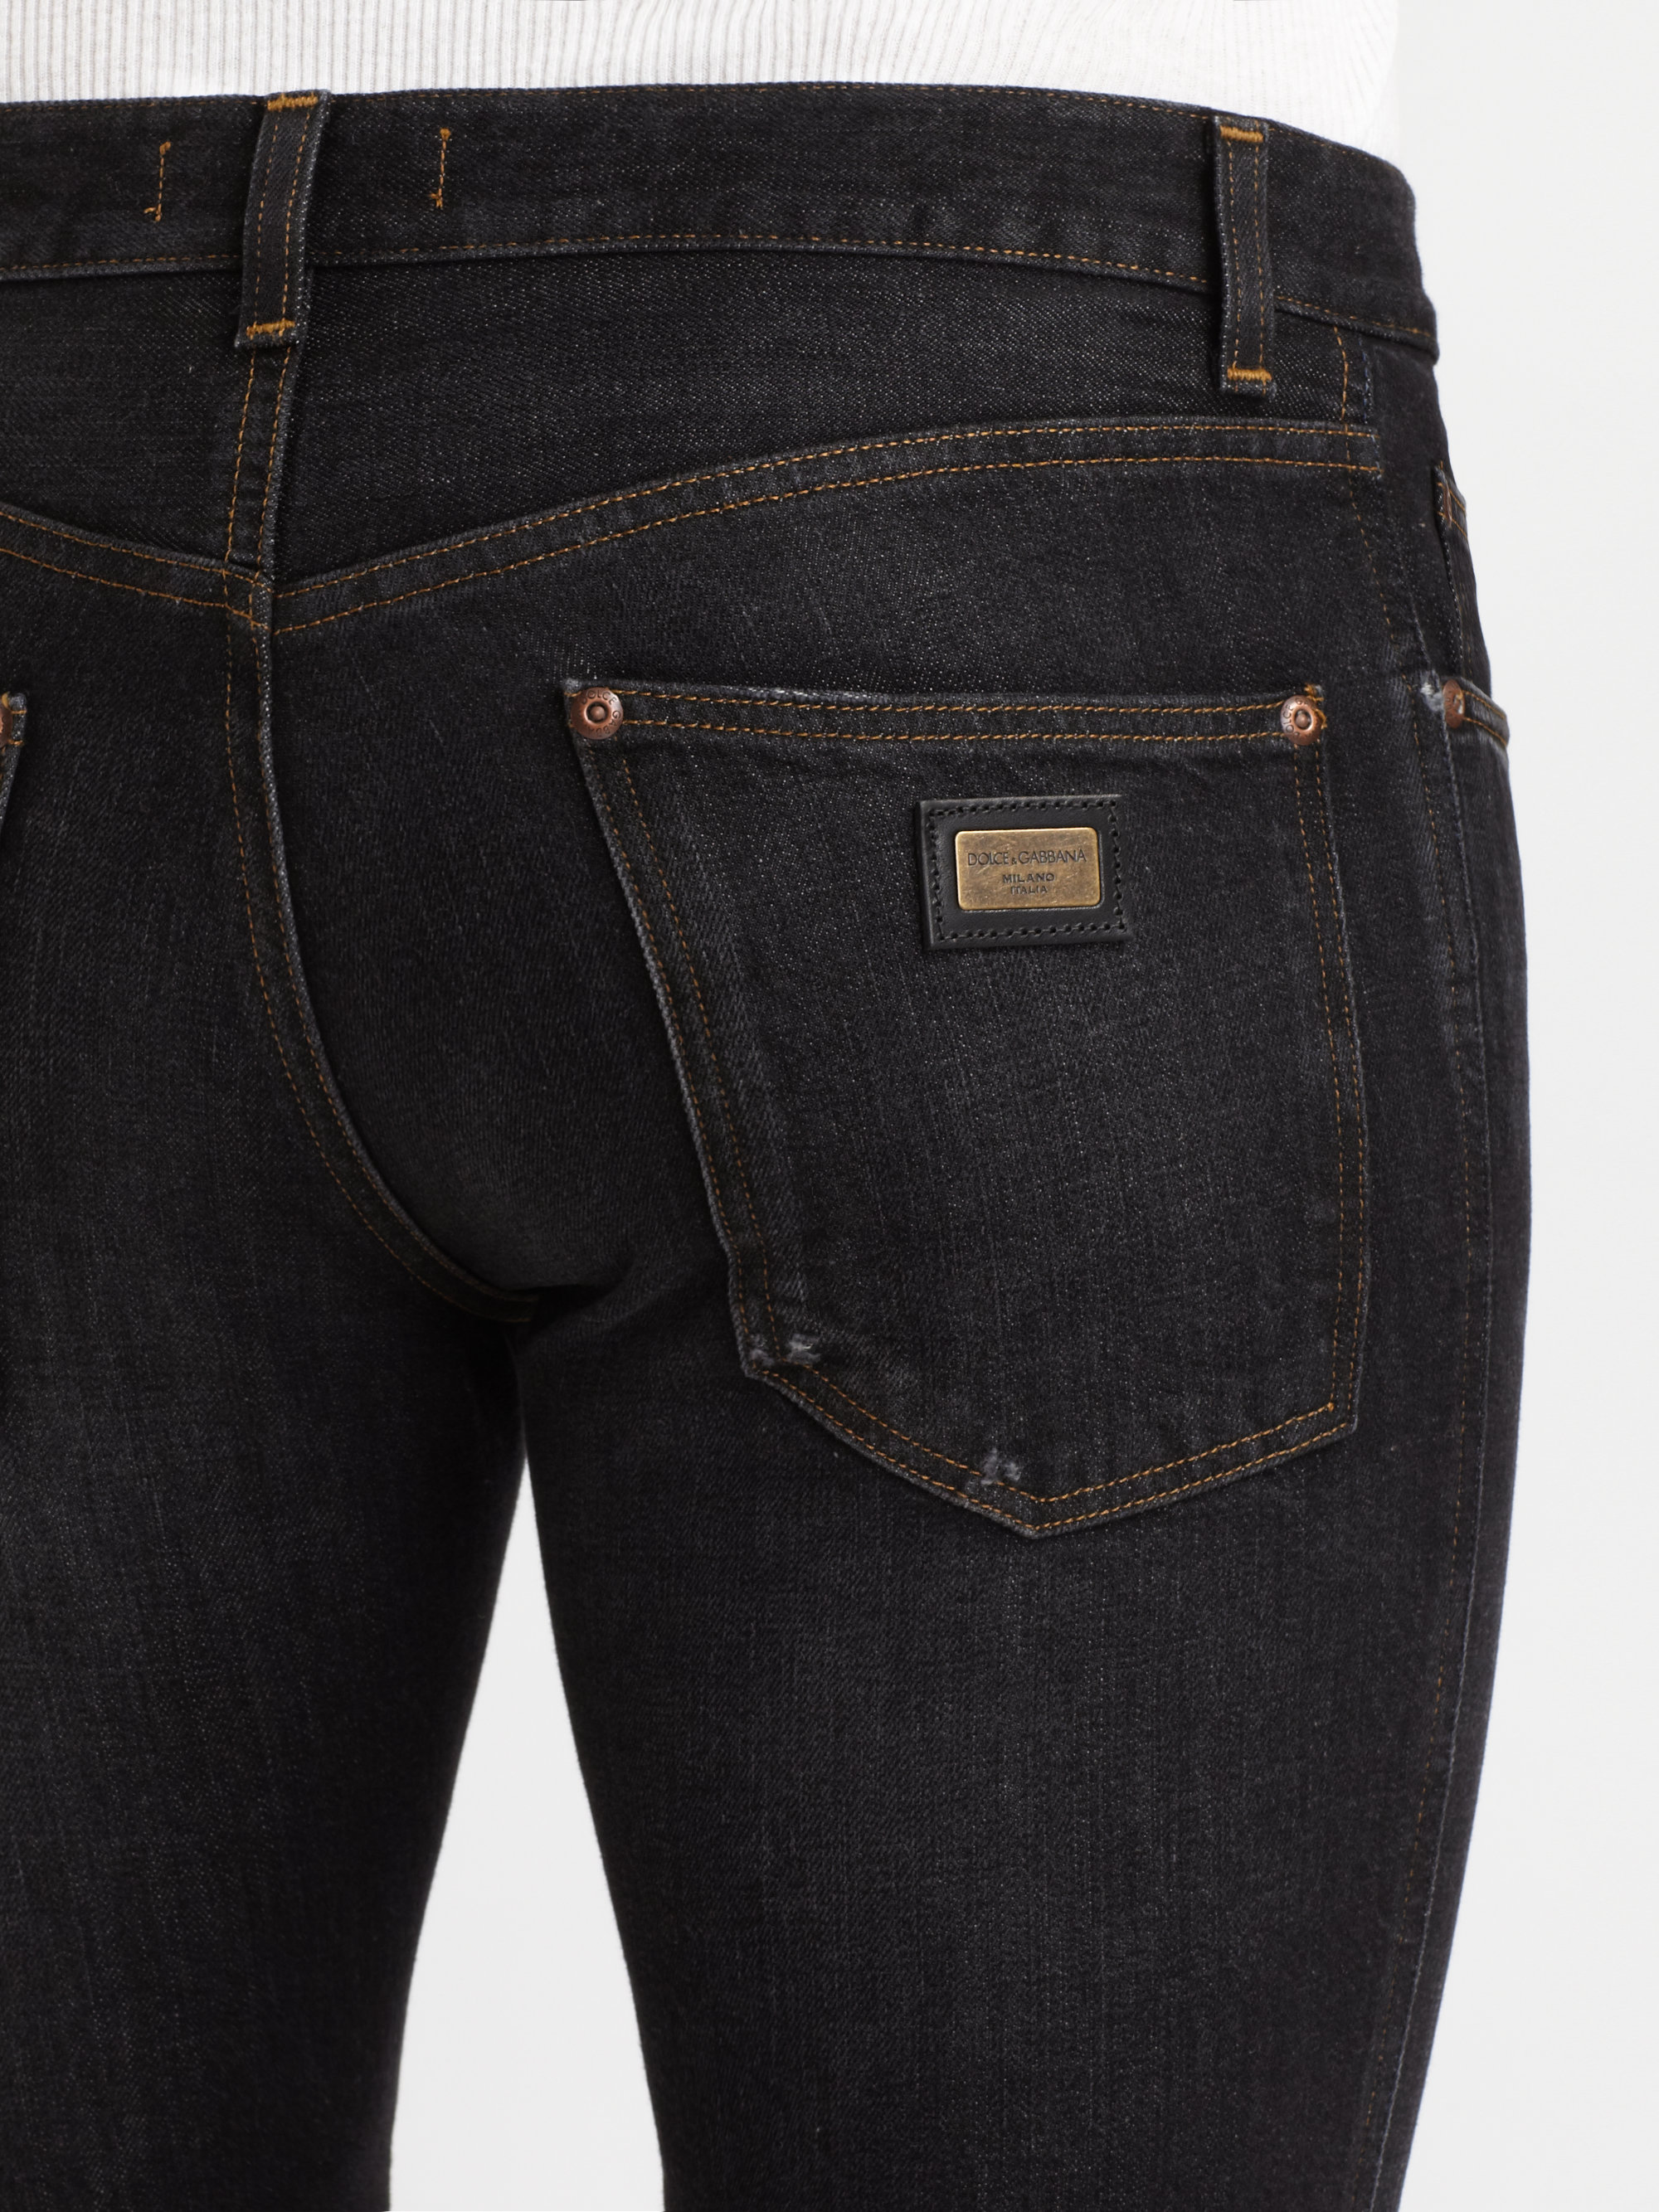 Dolce & Gabbana Gold-Fit Denim Jeans in Black for Men - Lyst